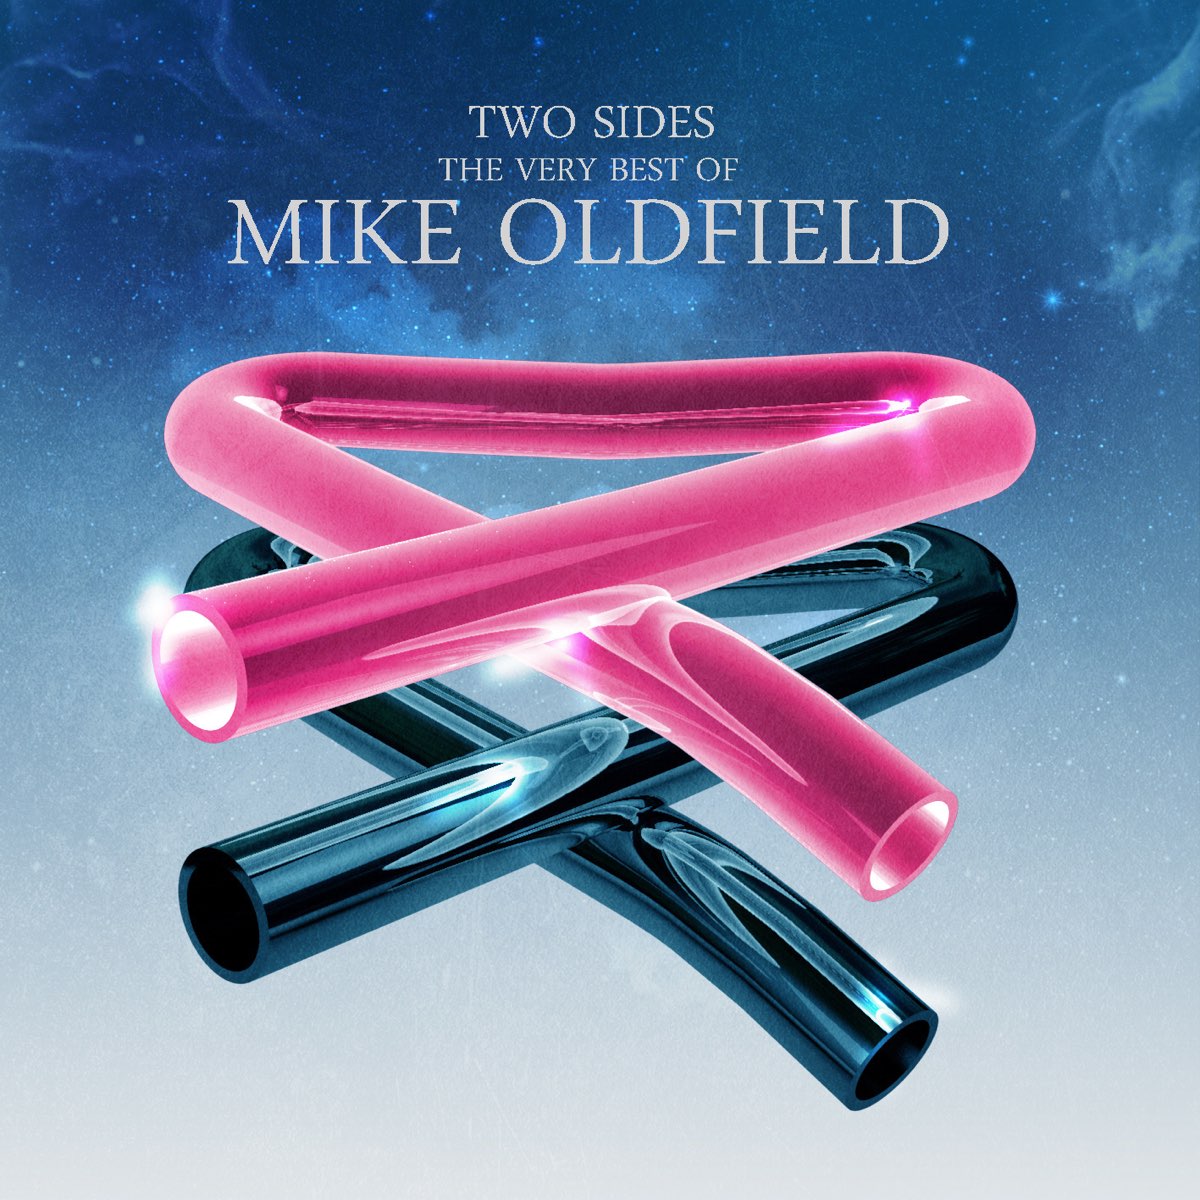 Two Sides: The Very Best of Mike Oldfield de Mike Oldfield en Apple Music